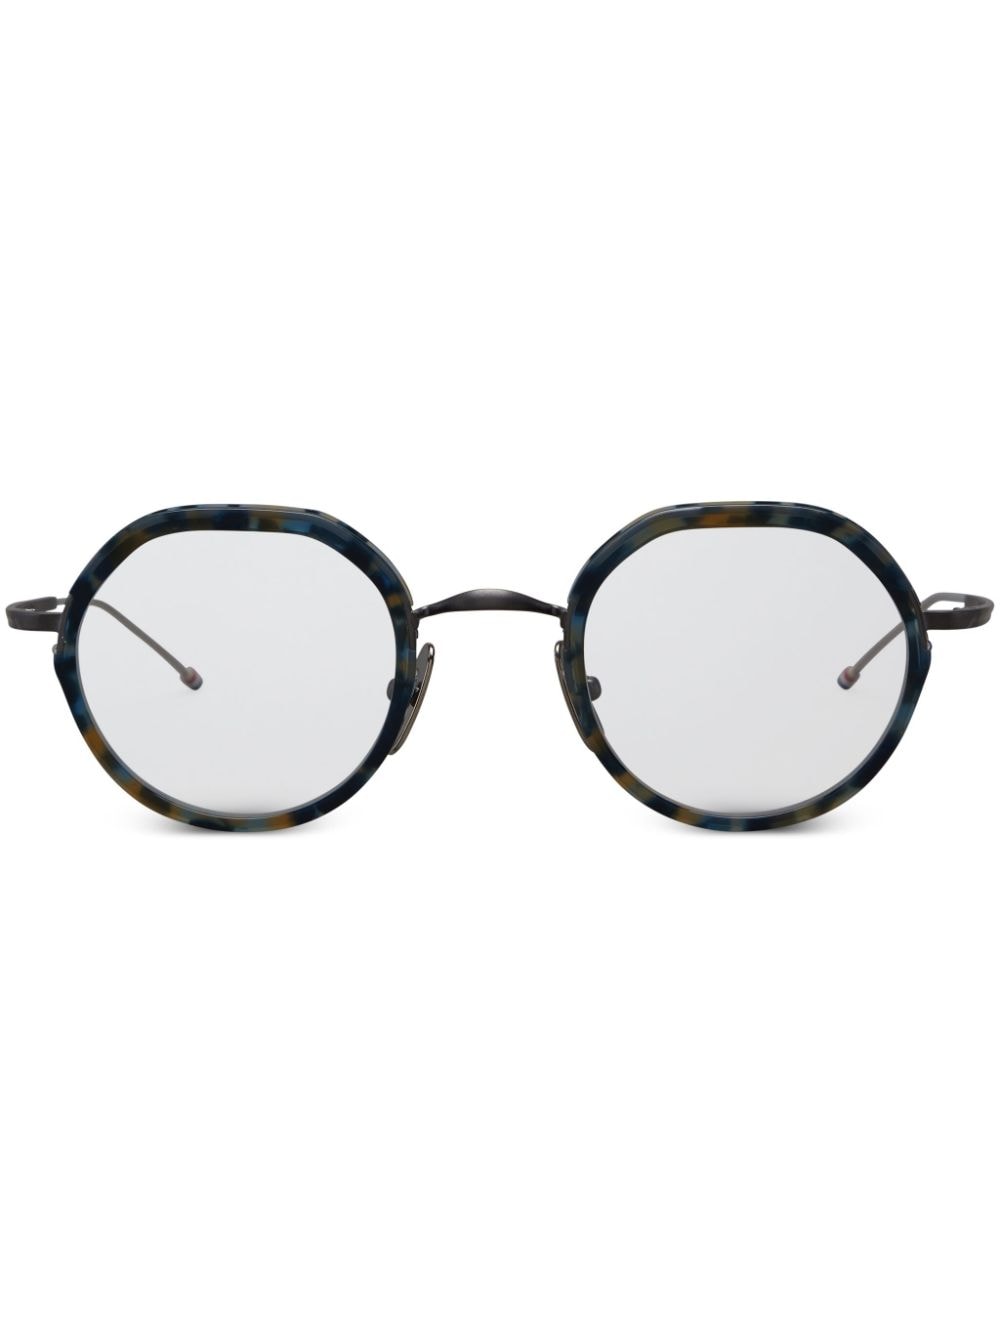 Thom Browne Eyewear tortoiseshell round-frame glasses - Blue von Thom Browne Eyewear